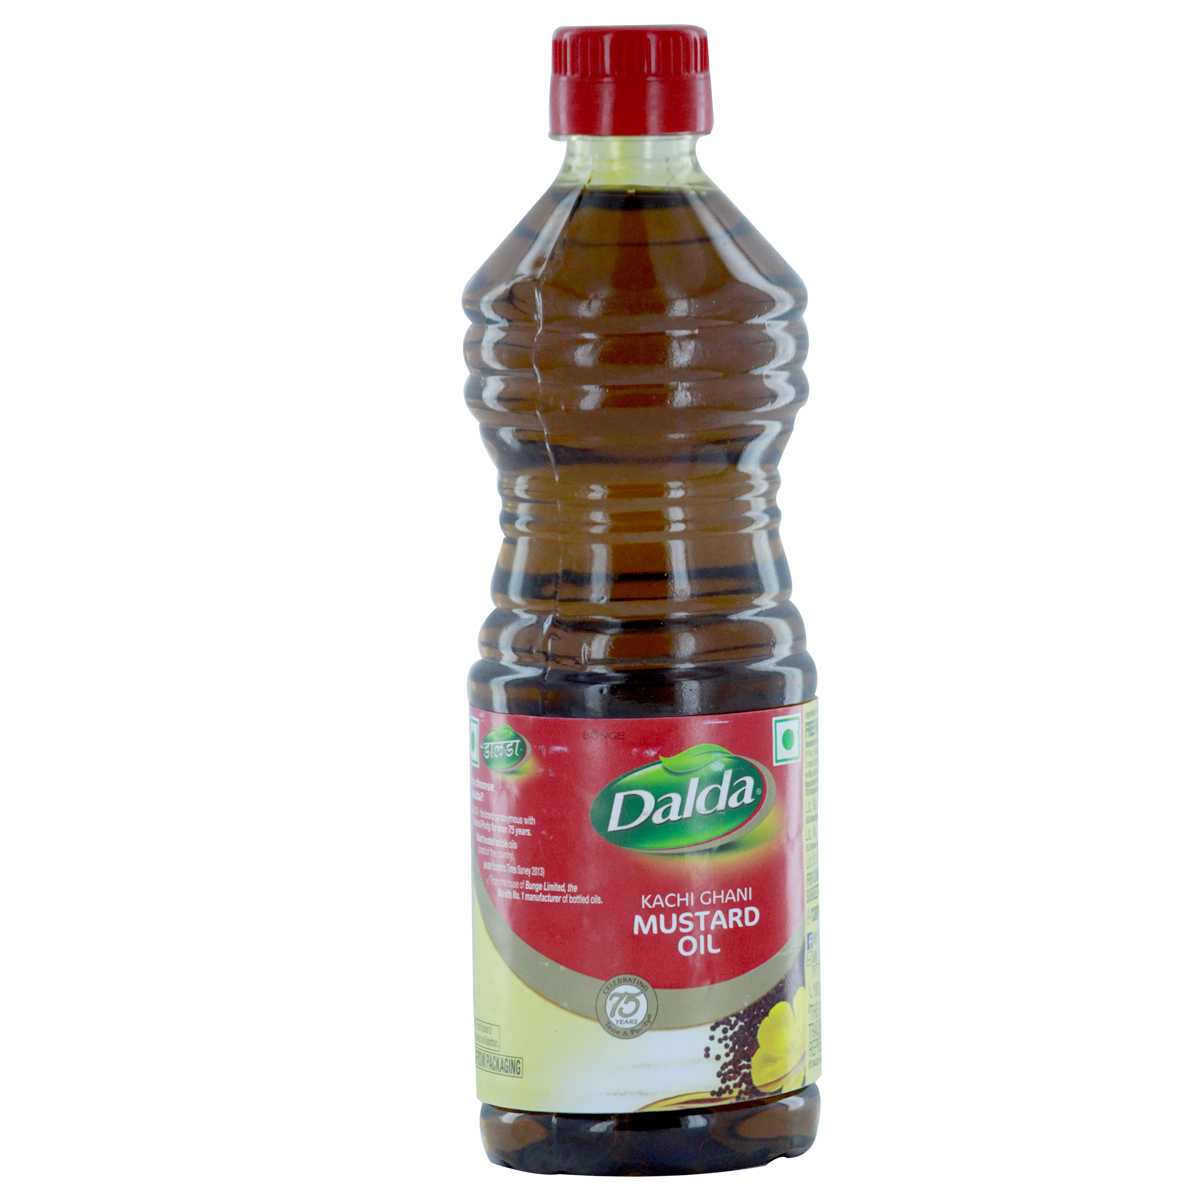 Dalda Khachi Ghani Mustard Oil 500ml